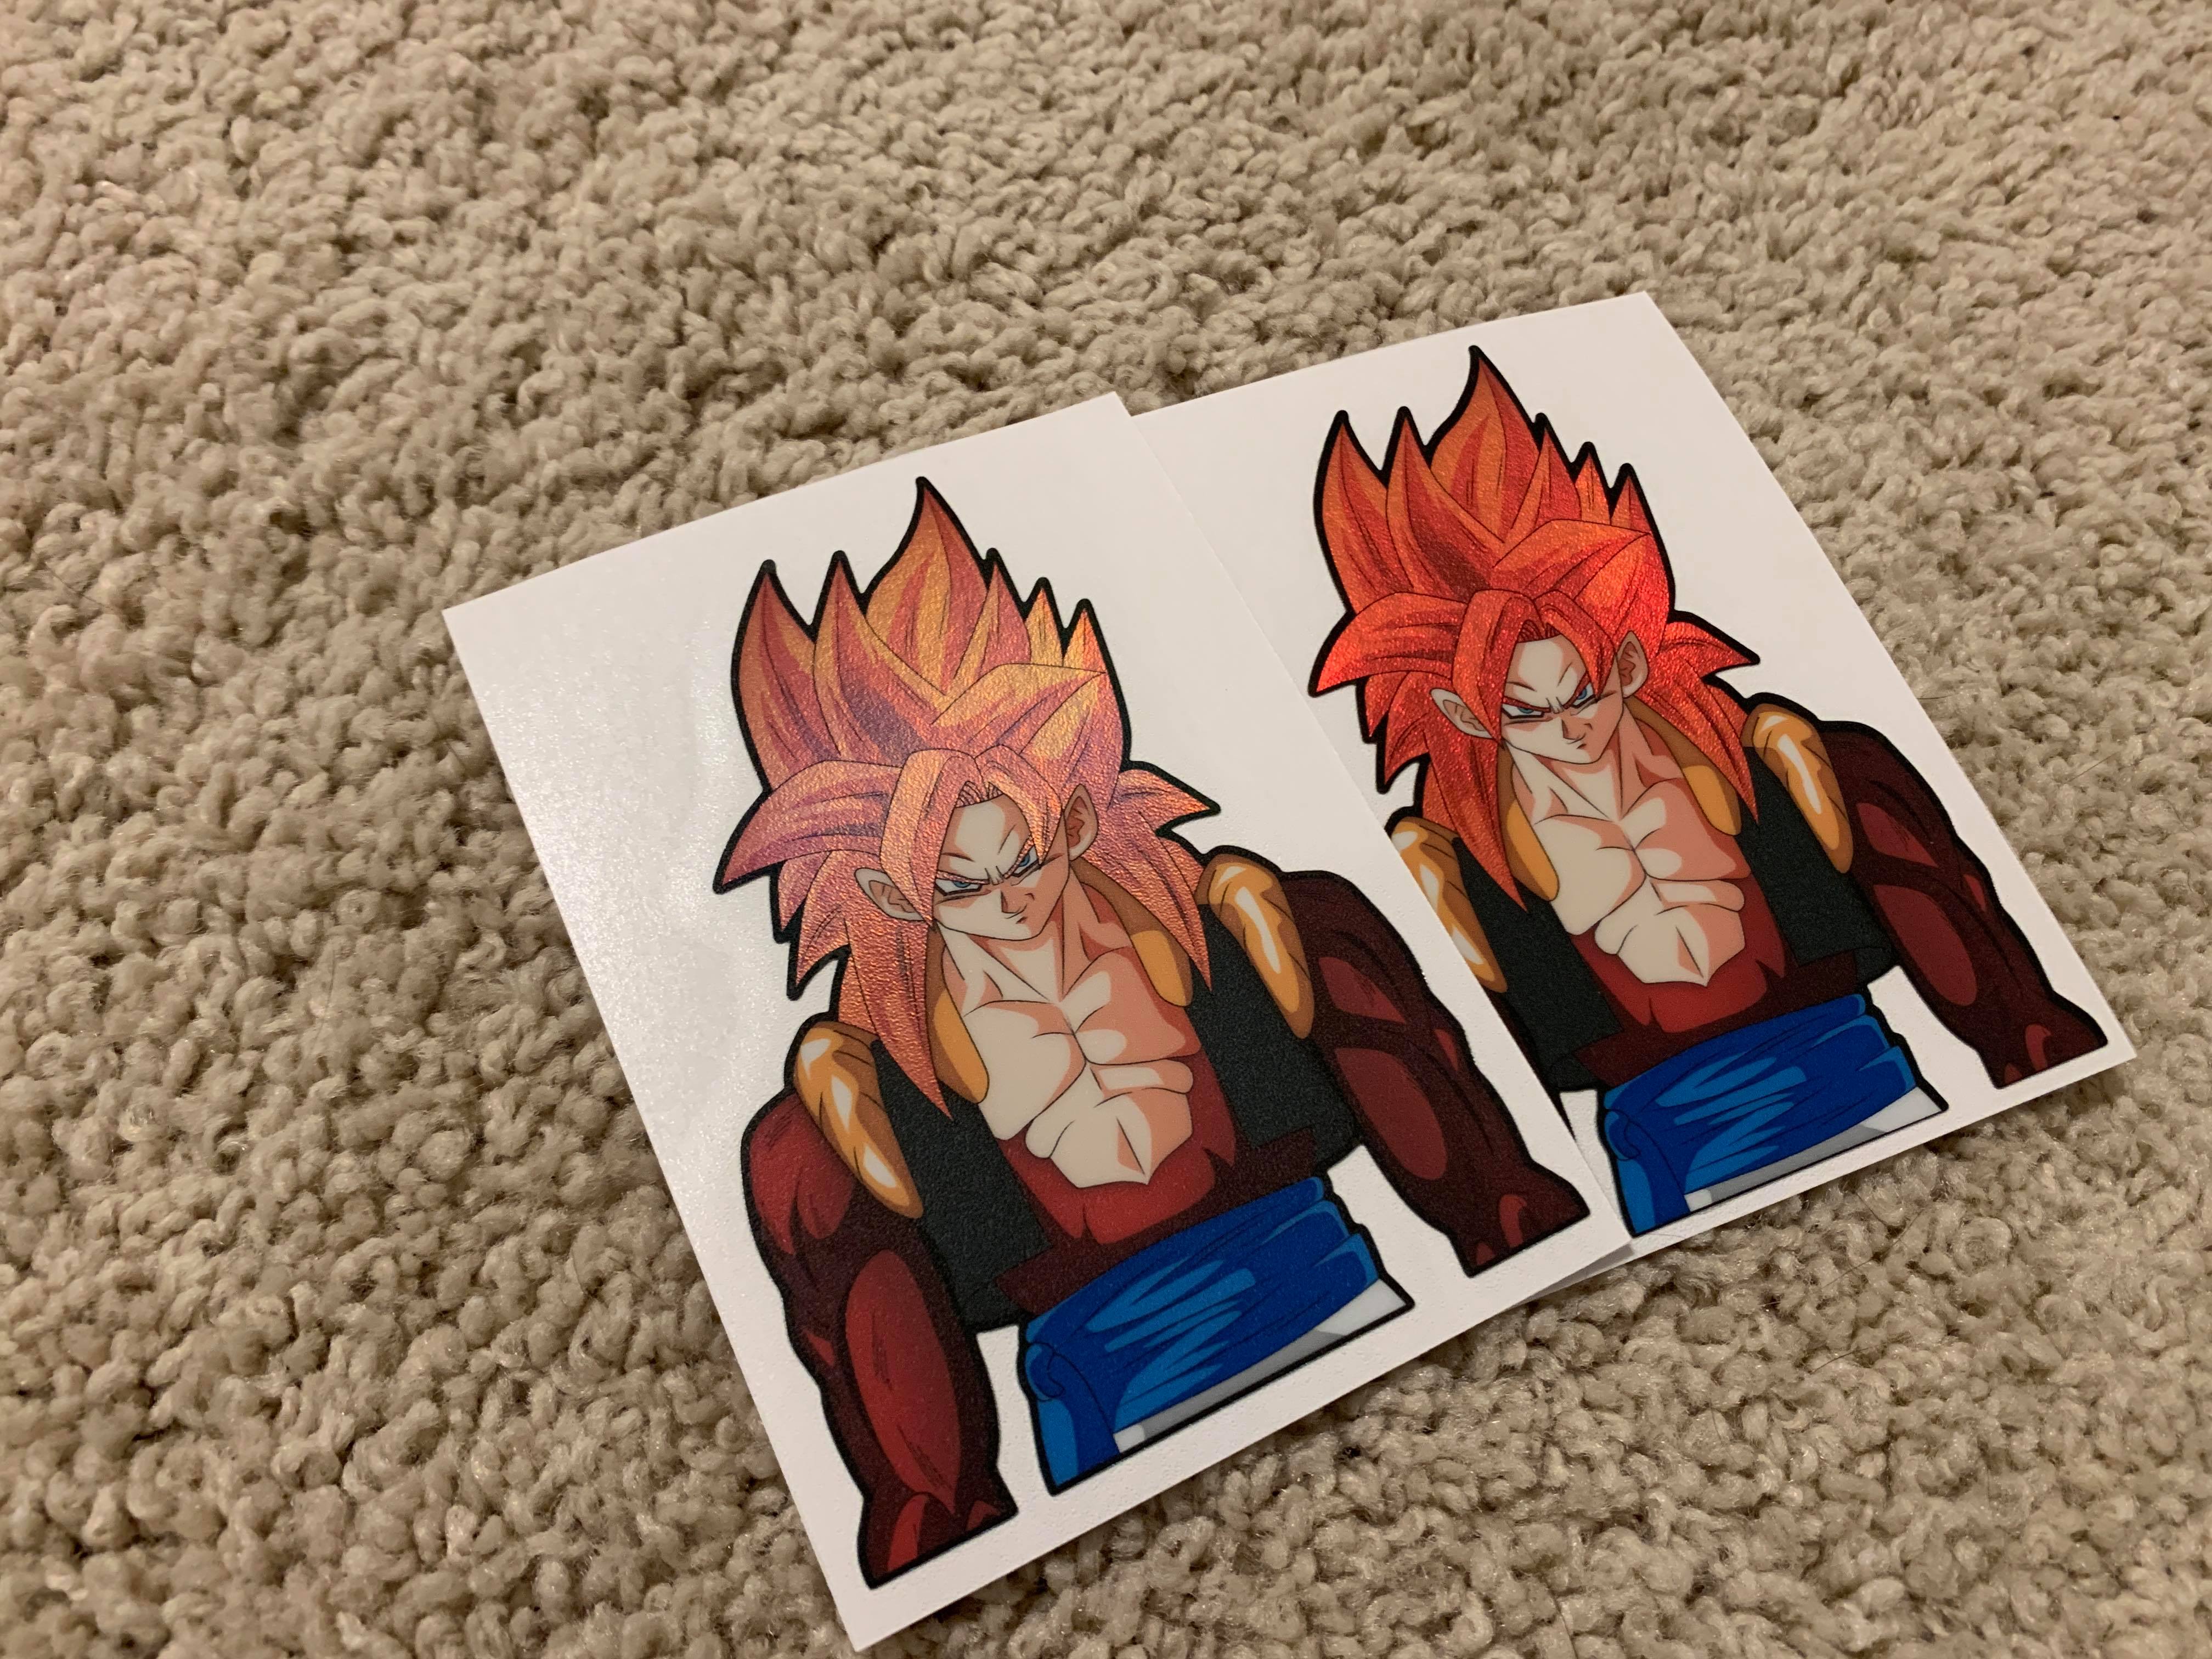 Sticker autocollant holographique - Gogeta - Dragon Ball Z - Stickers -  ENJOY SPIRIT